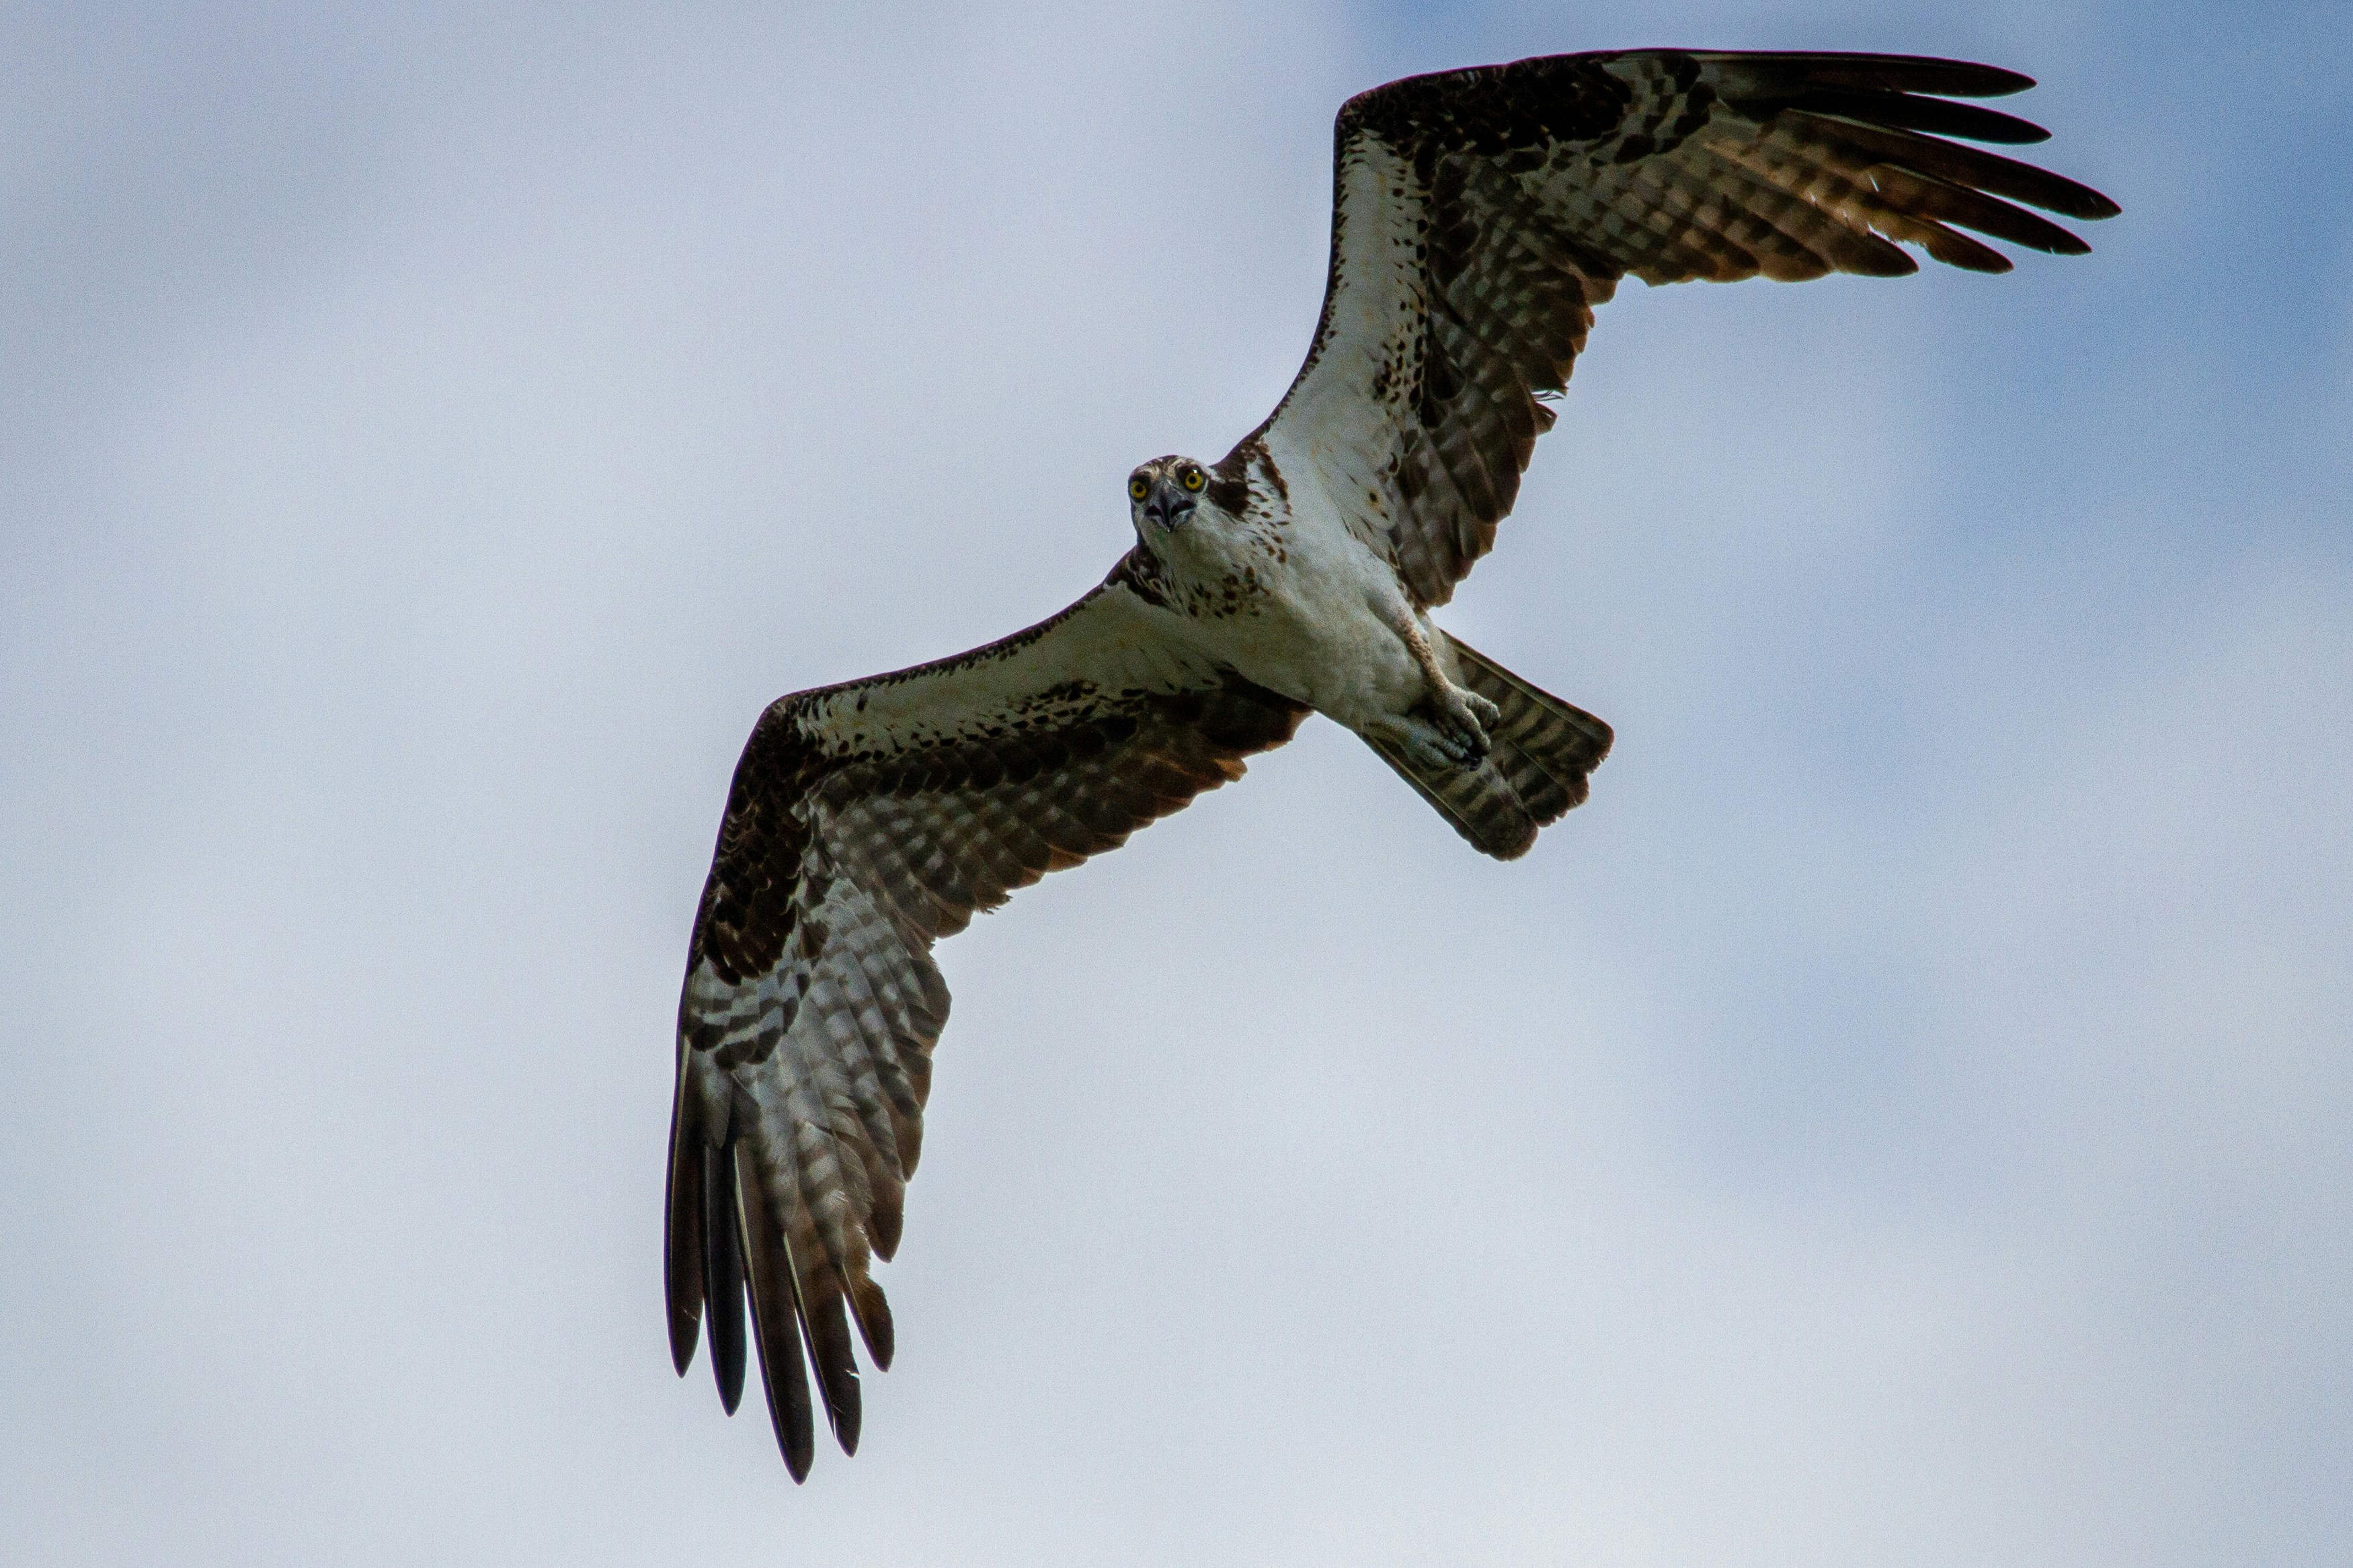 An osprey soaring overhead.